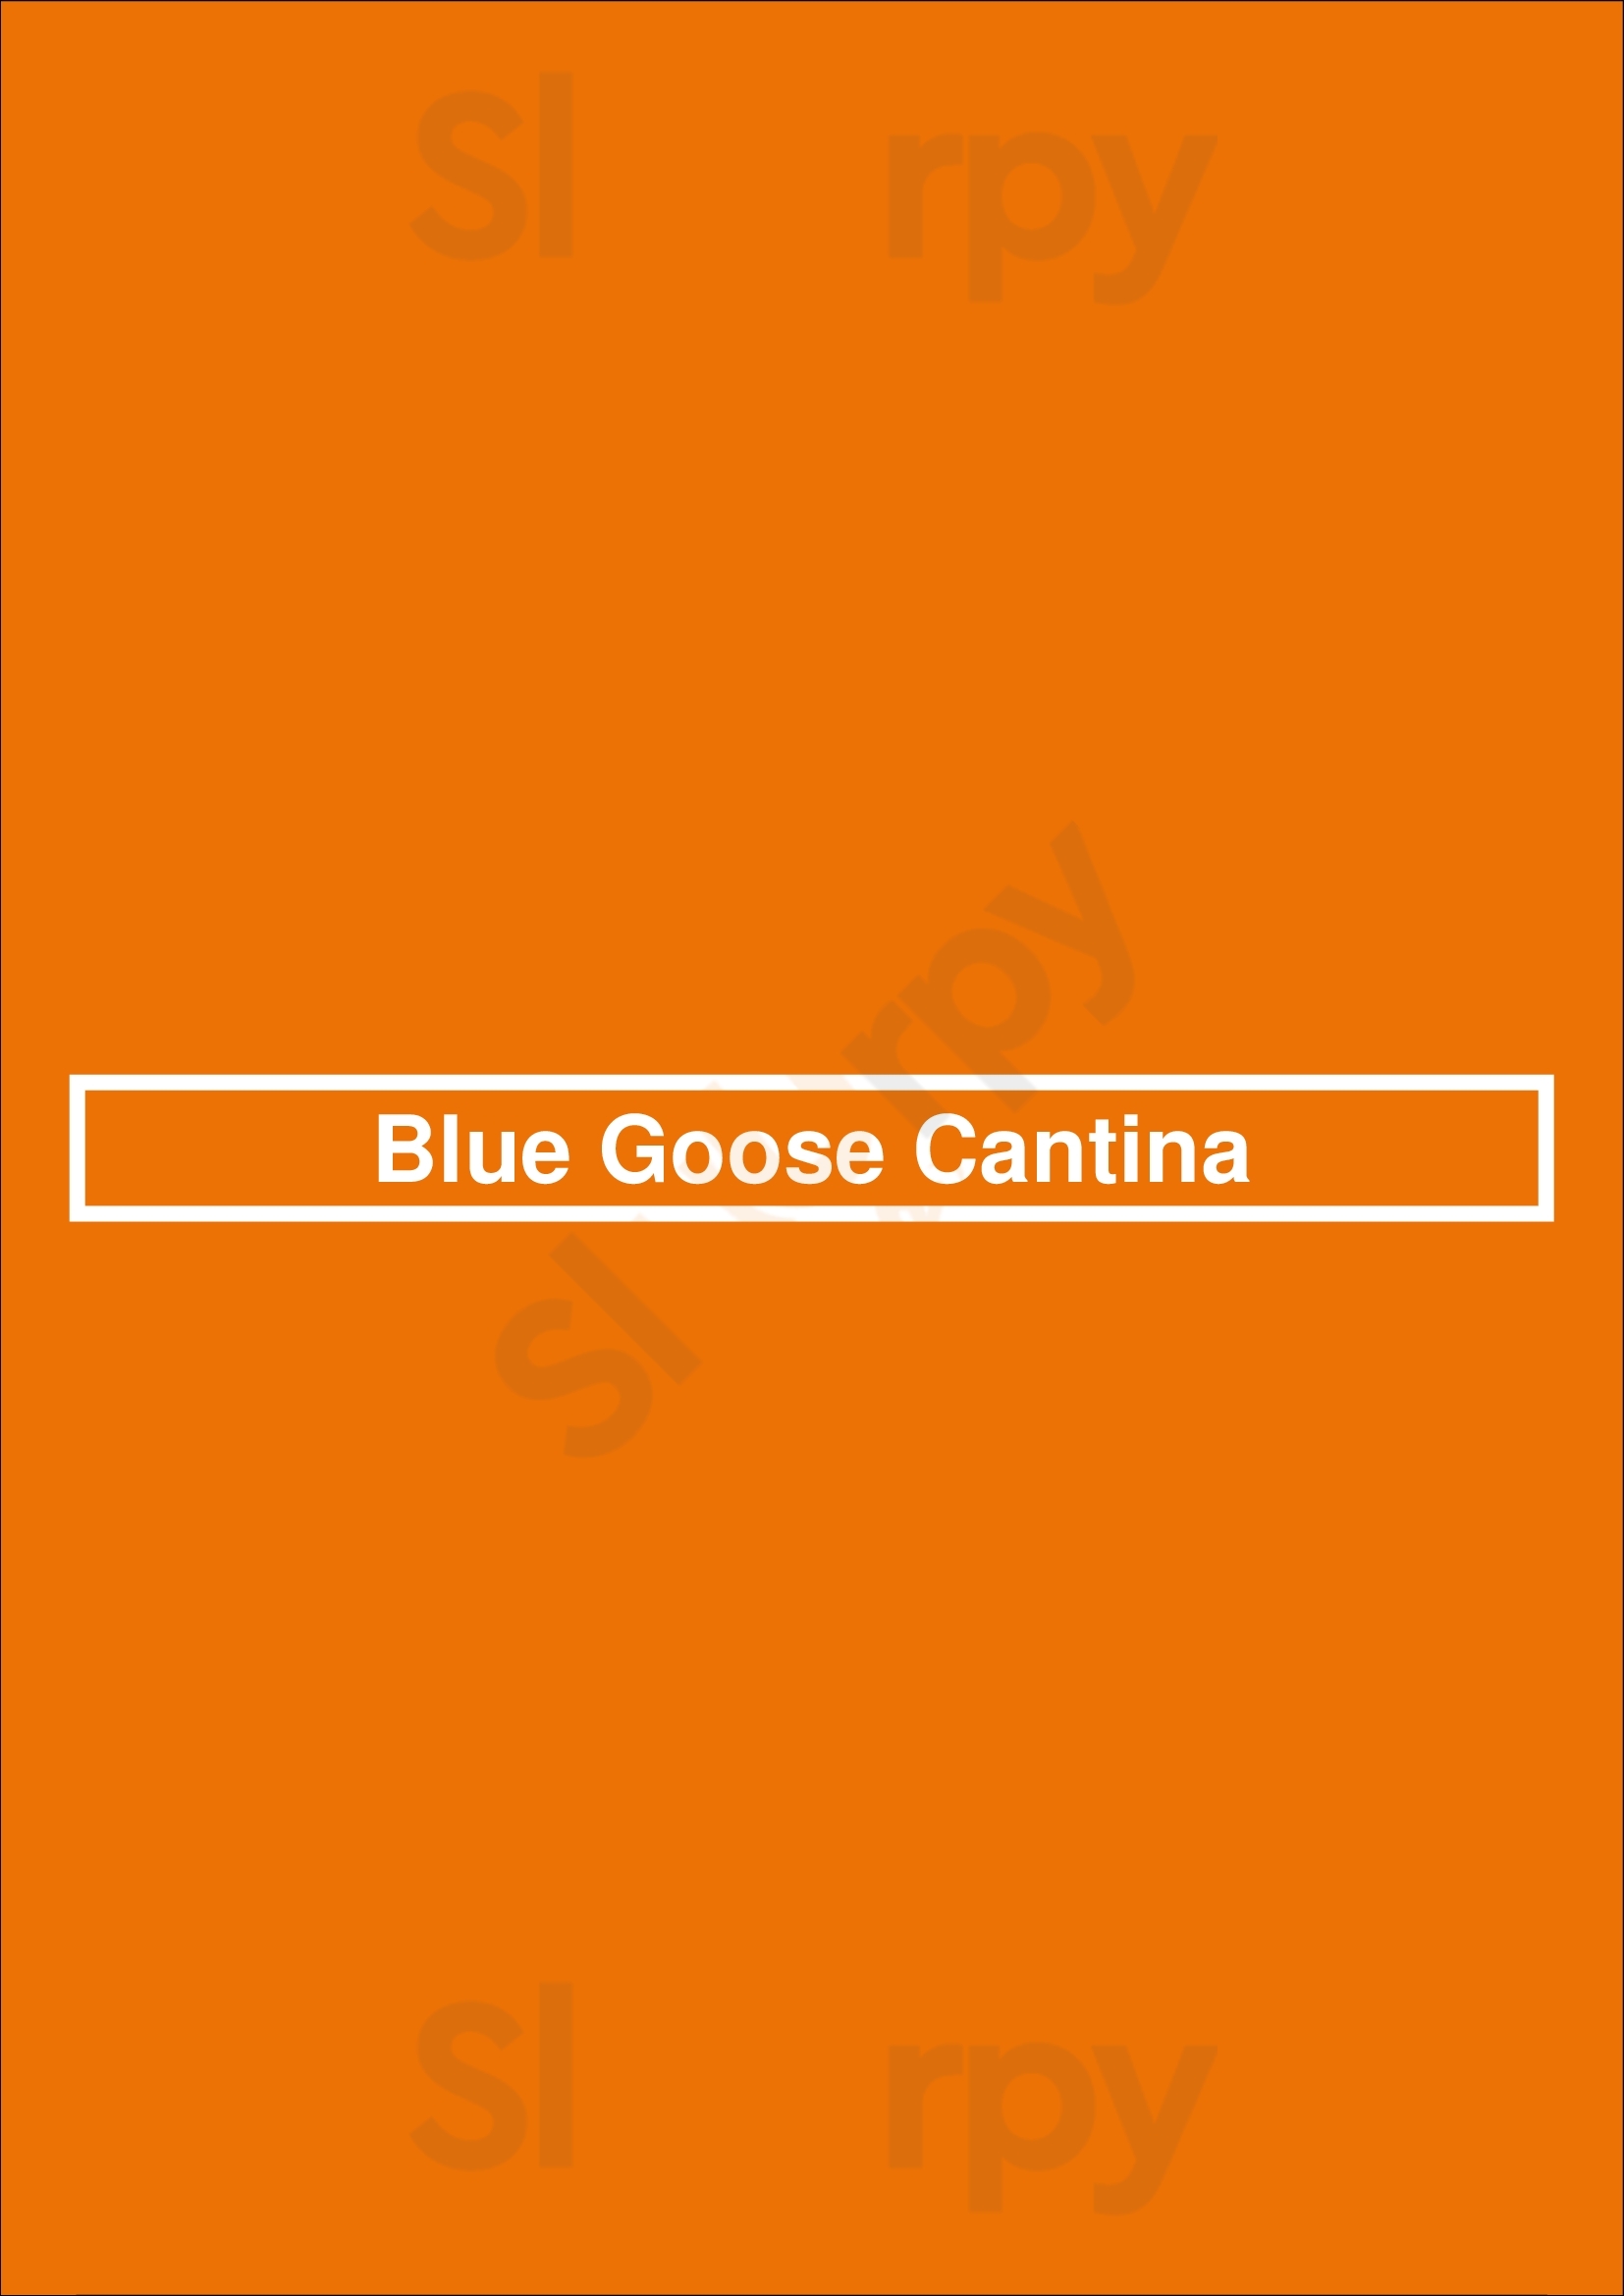 Blue Goose Cantina Dallas Menu - 1